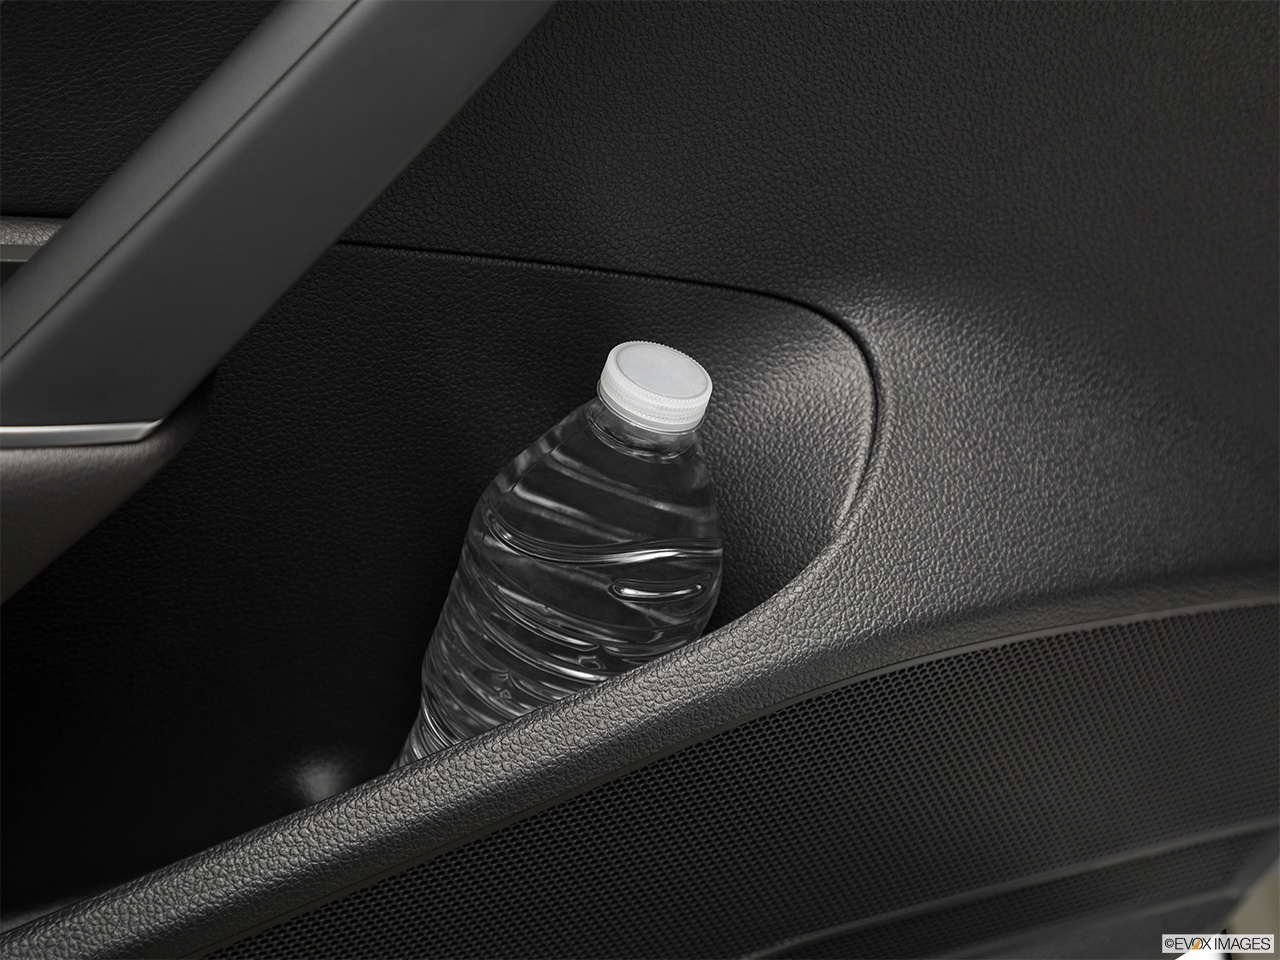 2018 Volkswagen Passat 2.0T SEL Premium Second row side cup holder with coffee prop, or second row door cup holder with water bottle. 